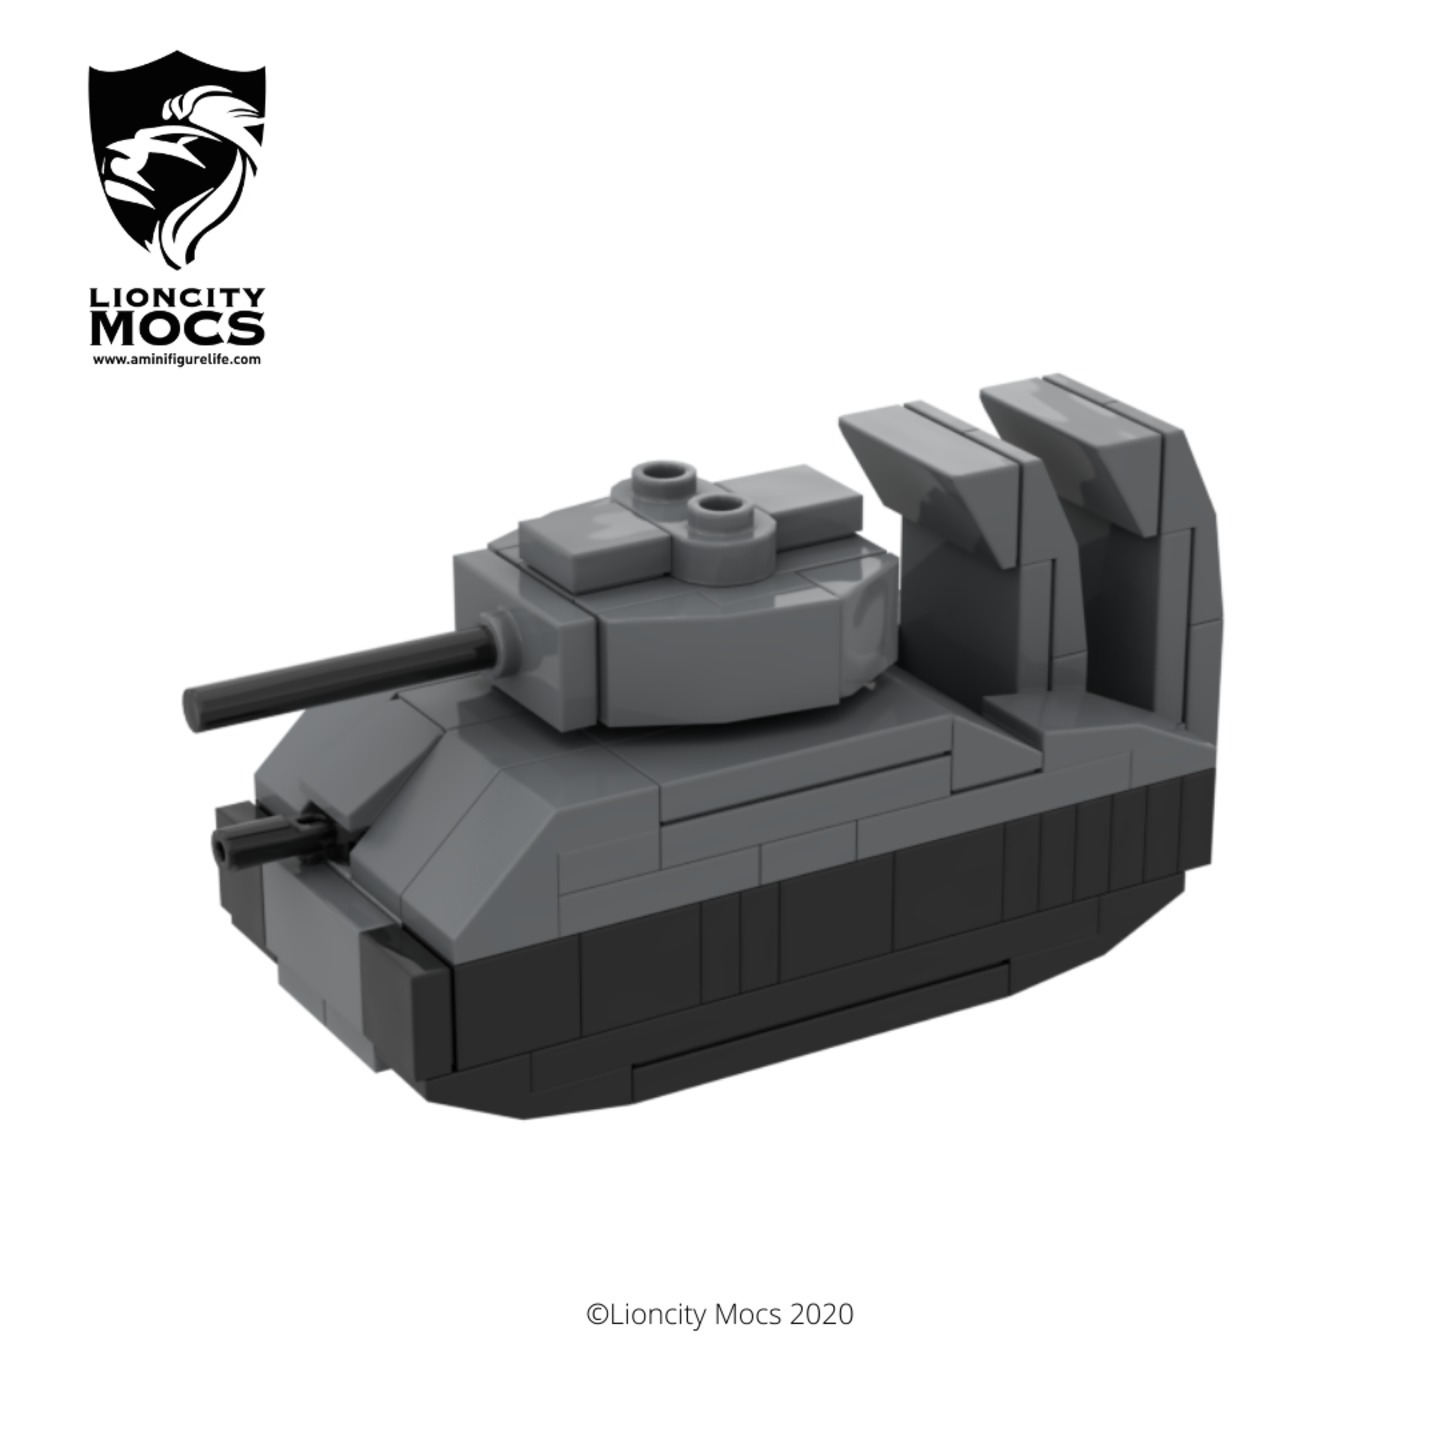  [PDF Instructions Only] M4 Sherman Snorkel Mini Tank